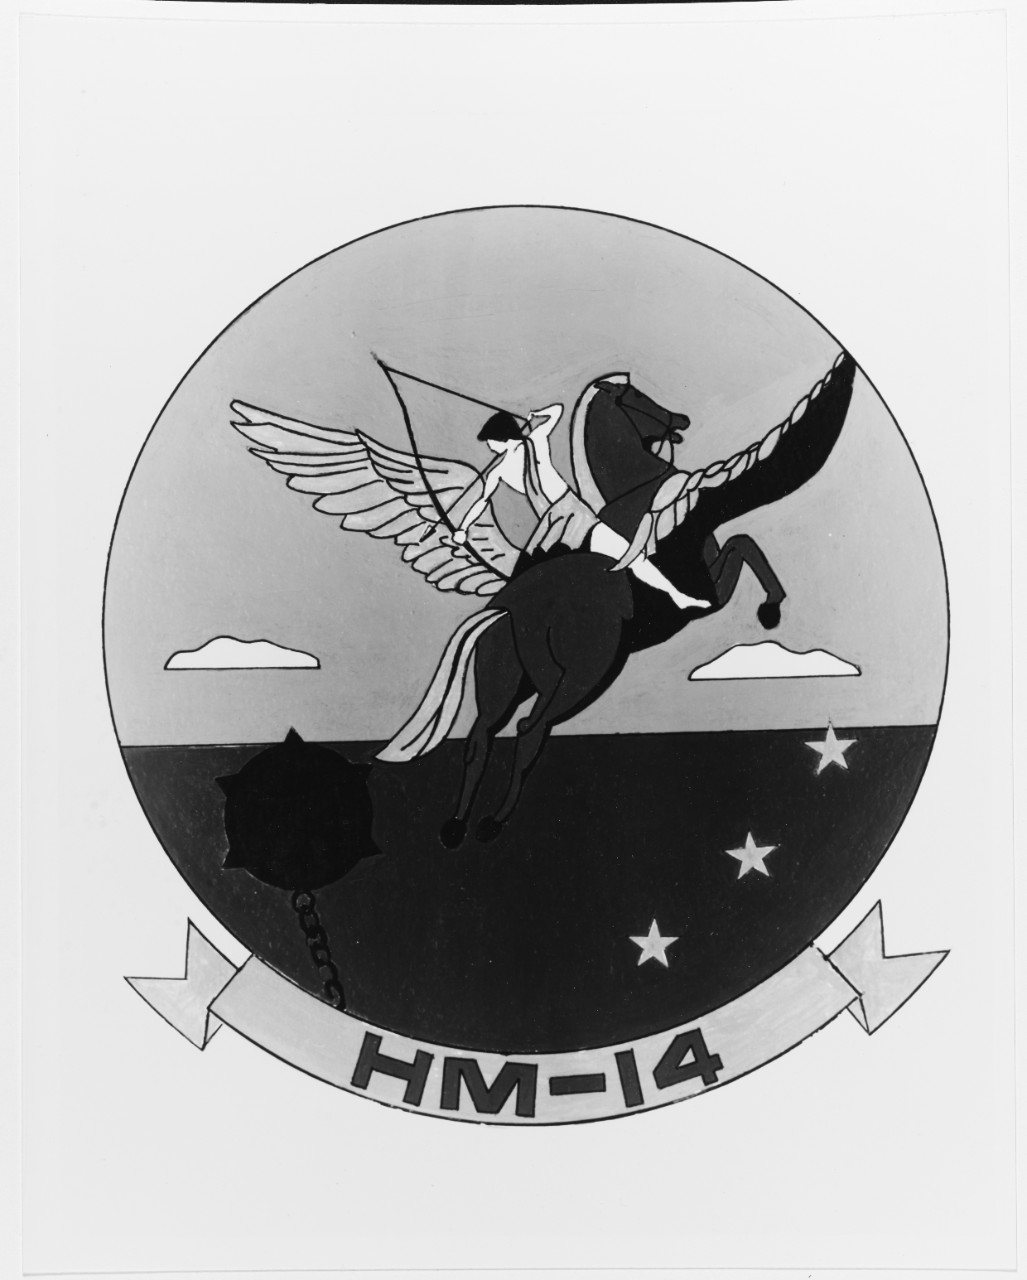 Insignia: Helicopter Mine Countermeasures Squadron 14 (HM-14)